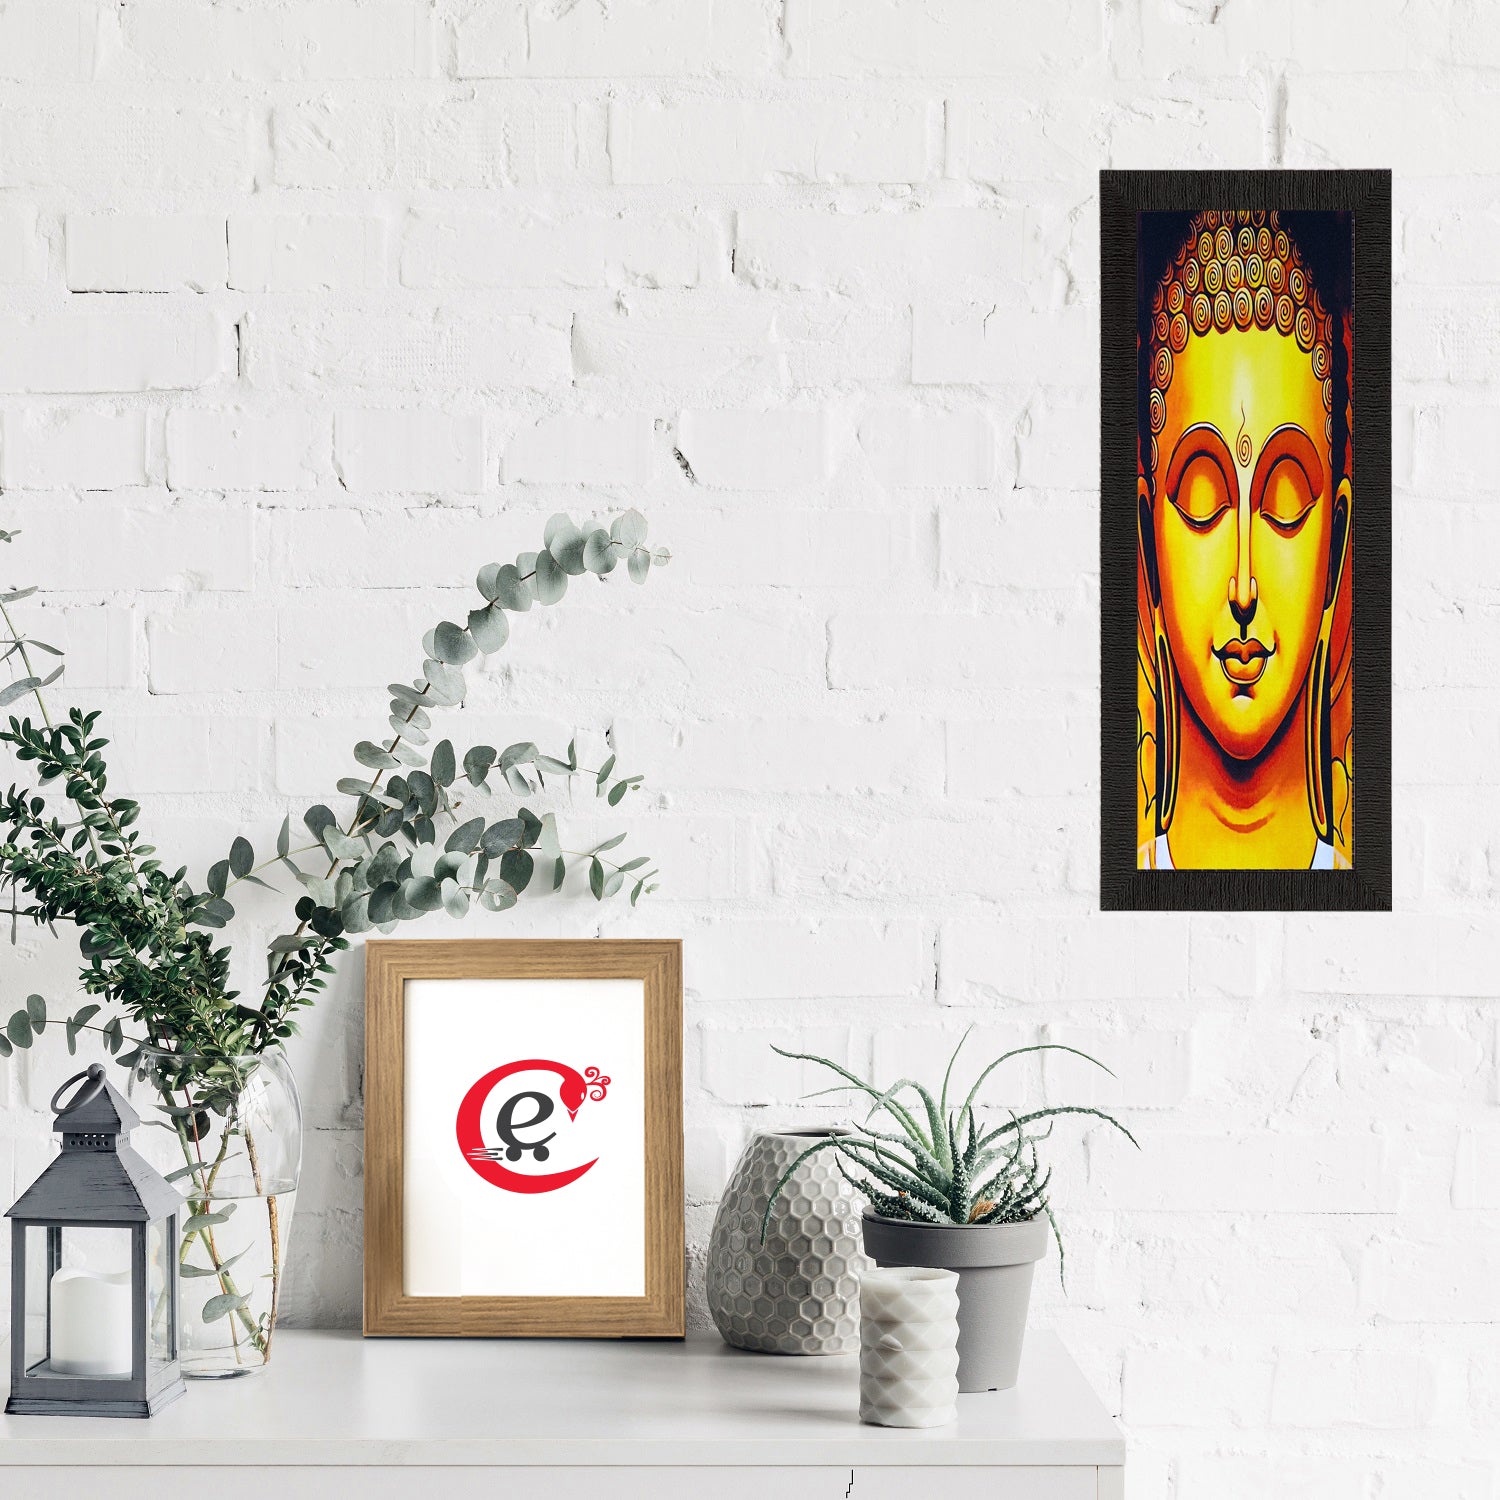 Enlightening Lord Buddha Painting Digital Printed Religious Wall Art 1